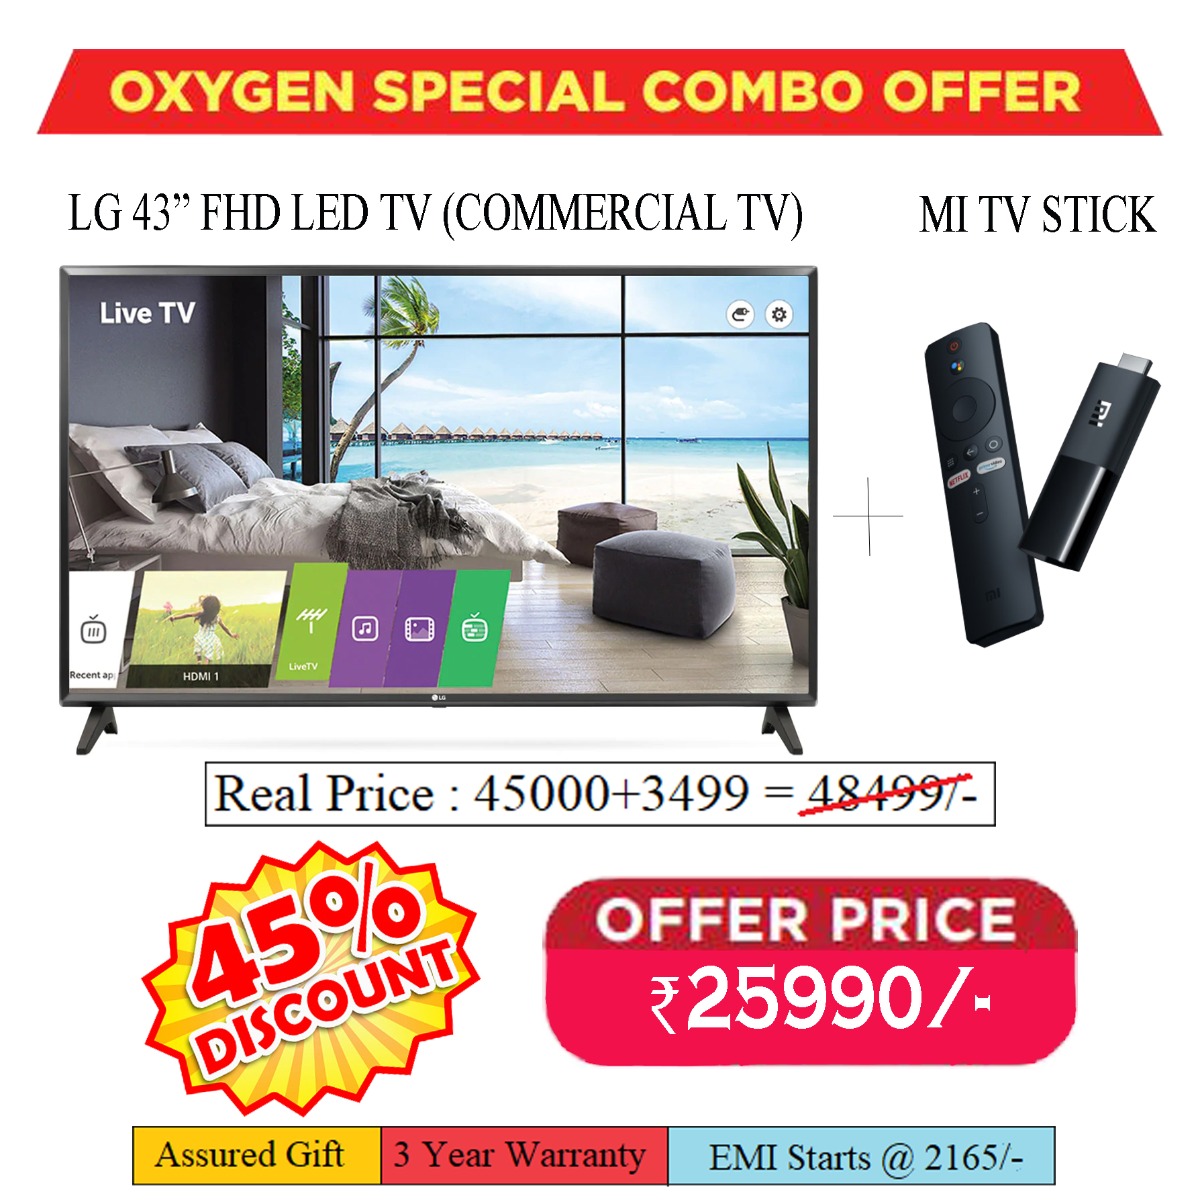 LG 43 inch FHD LED TV (Commercial TV) + Mi TV Stick Combo Offer